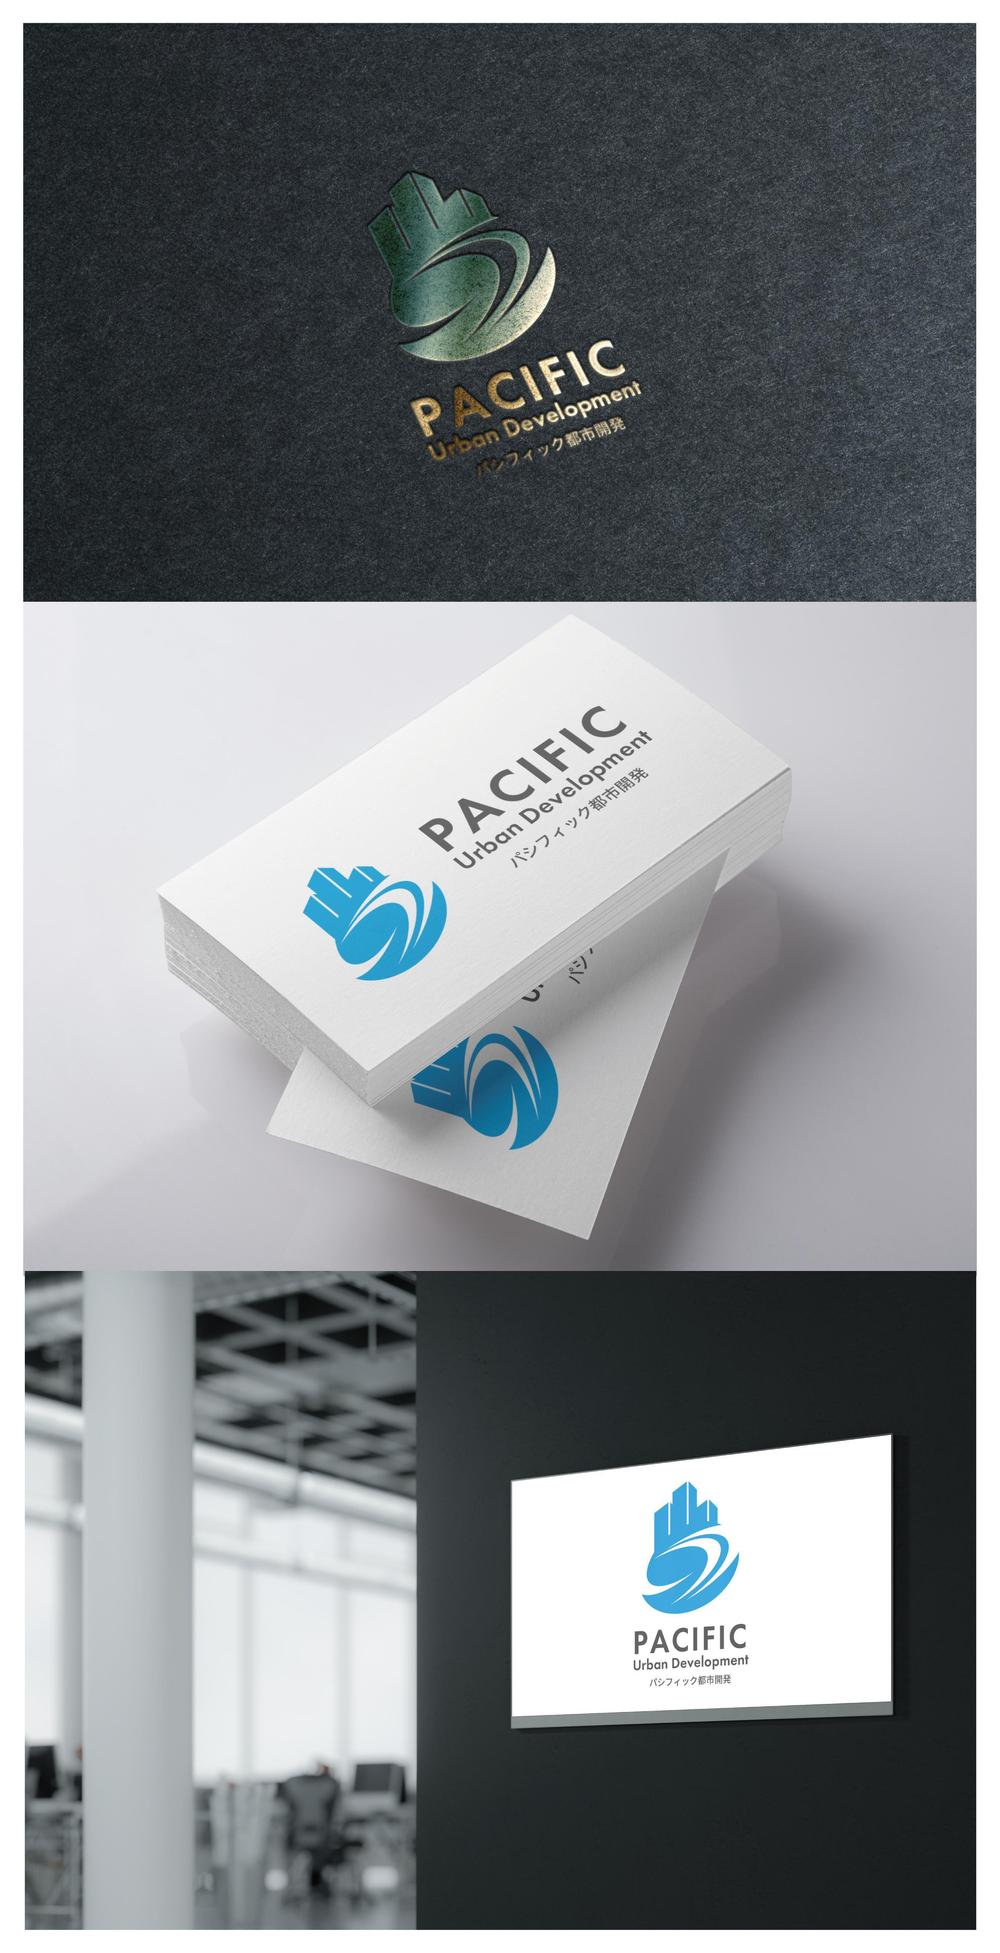 PACIFIC_logo02_01.jpg